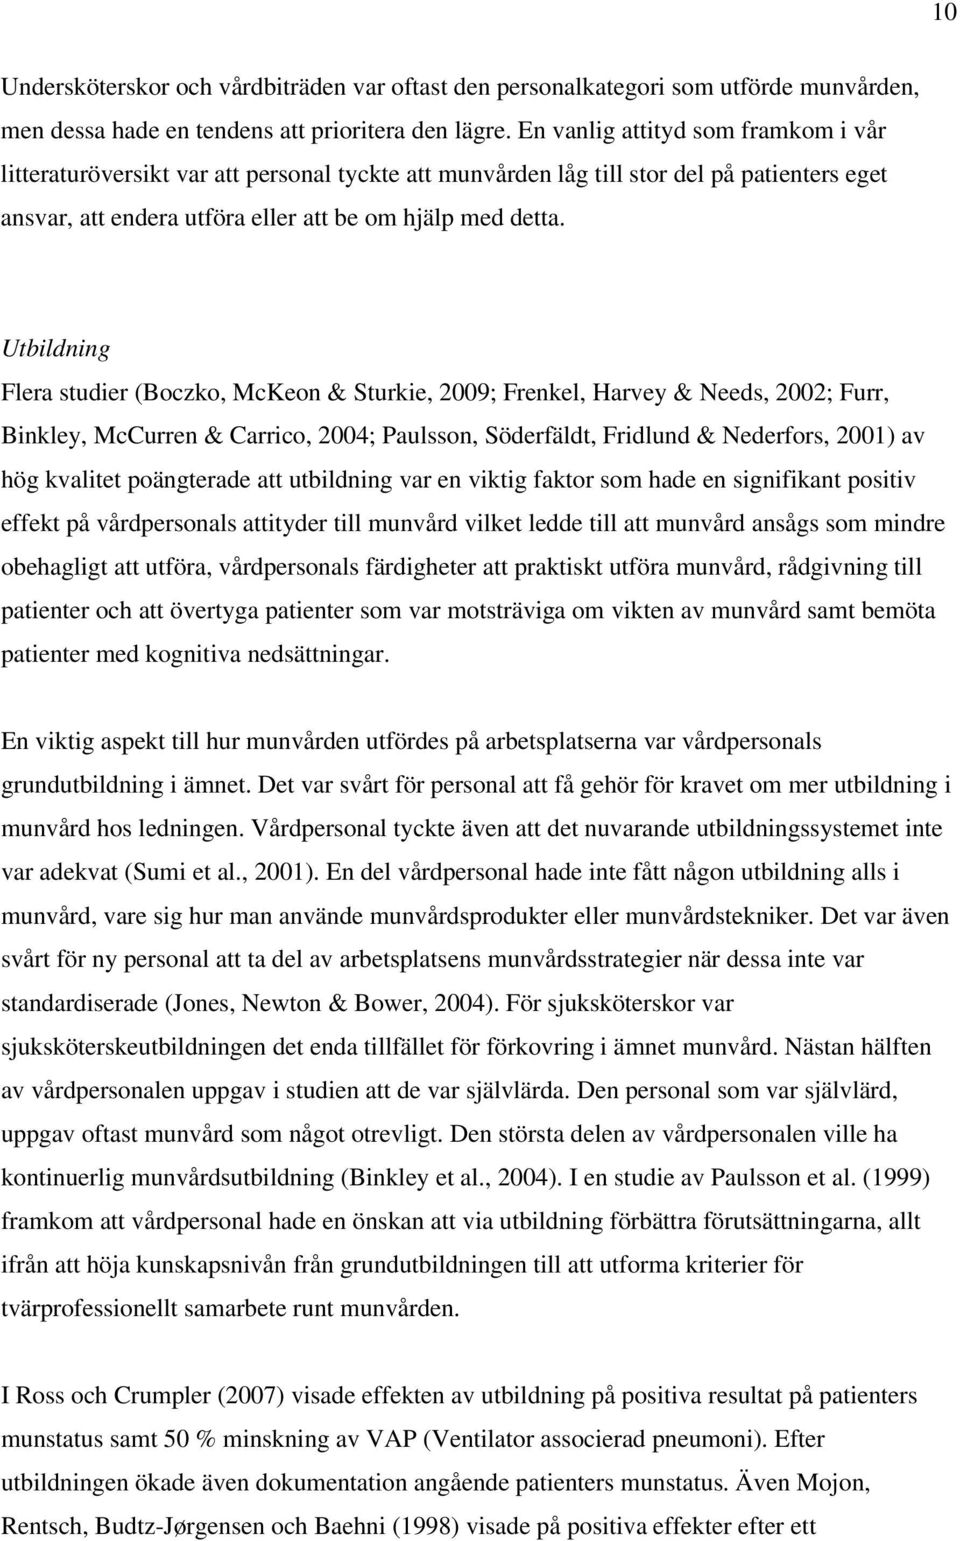 Utbildning Flera studier (Boczko, McKeon & Sturkie, 2009; Frenkel, Harvey & Needs, 2002; Furr, Binkley, McCurren & Carrico, 2004; Paulsson, Söderfäldt, Fridlund & Nederfors, 2001) av hög kvalitet